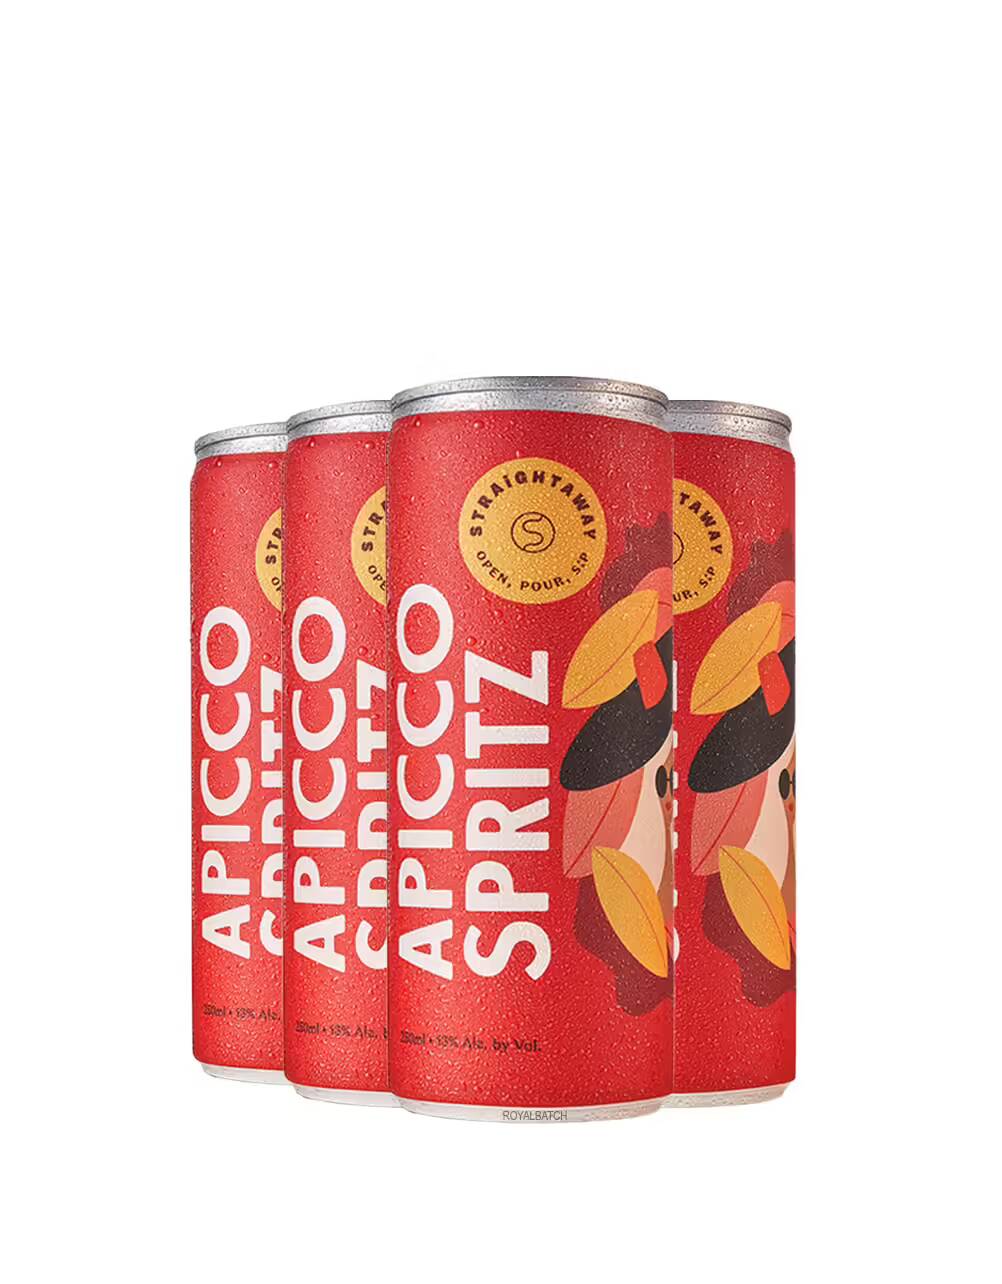 Apicco Spritz Straightaway Cocktails (4 Pack) 250ml